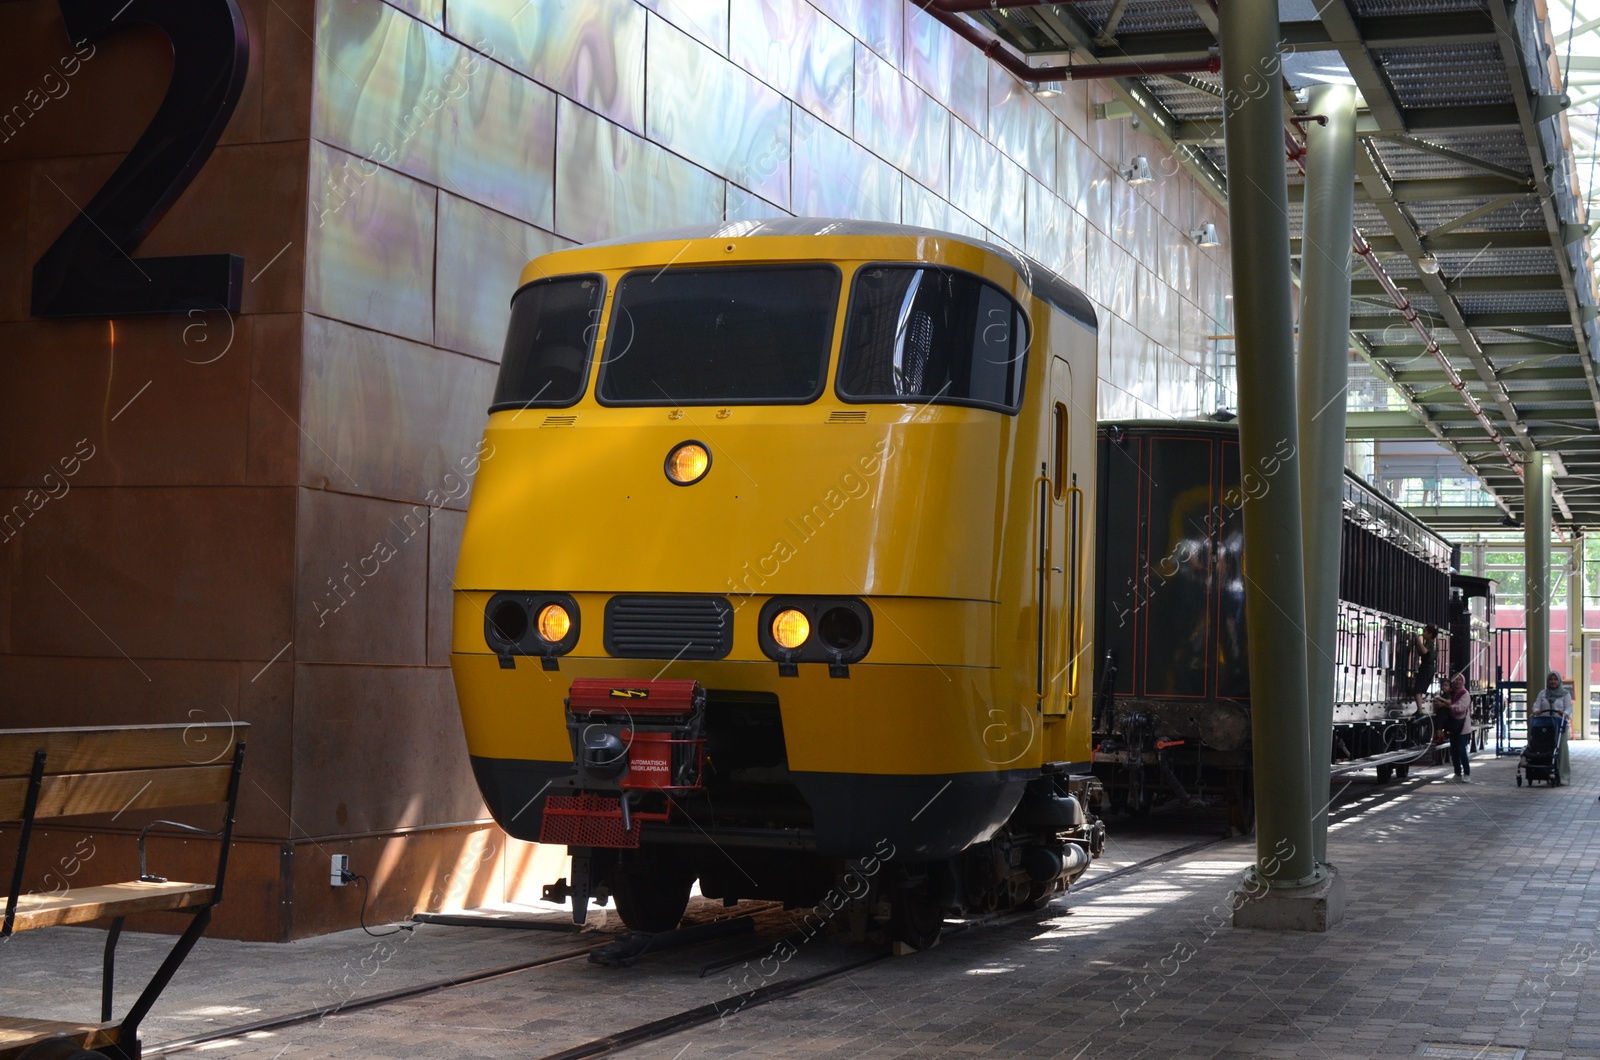 Photo of Utrecht, Netherlands - July 23, 2022: Old yellow train on display in Spoorwegmuseum